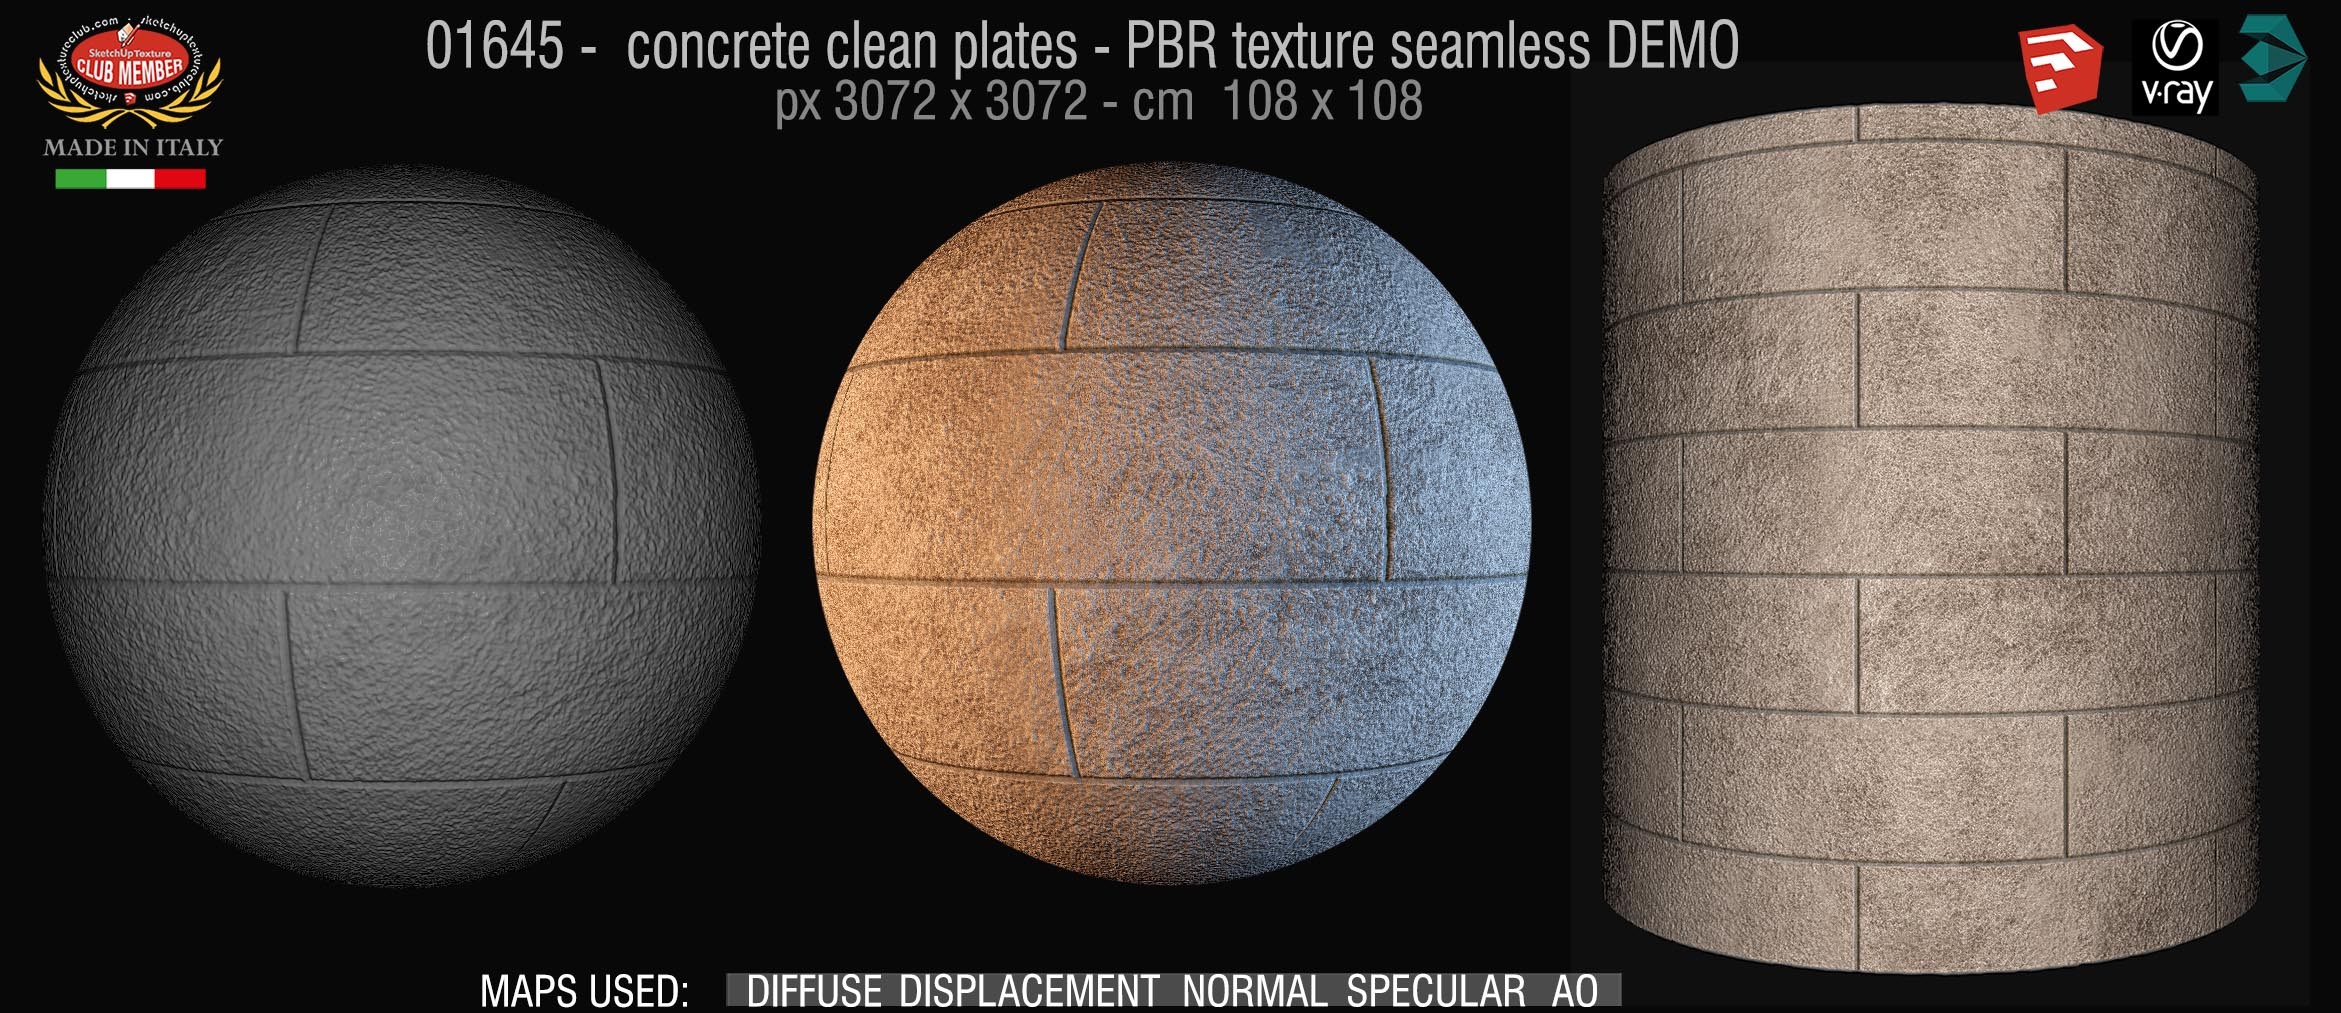 01645 concrete clean plates wall PBR texture seamless DEMO